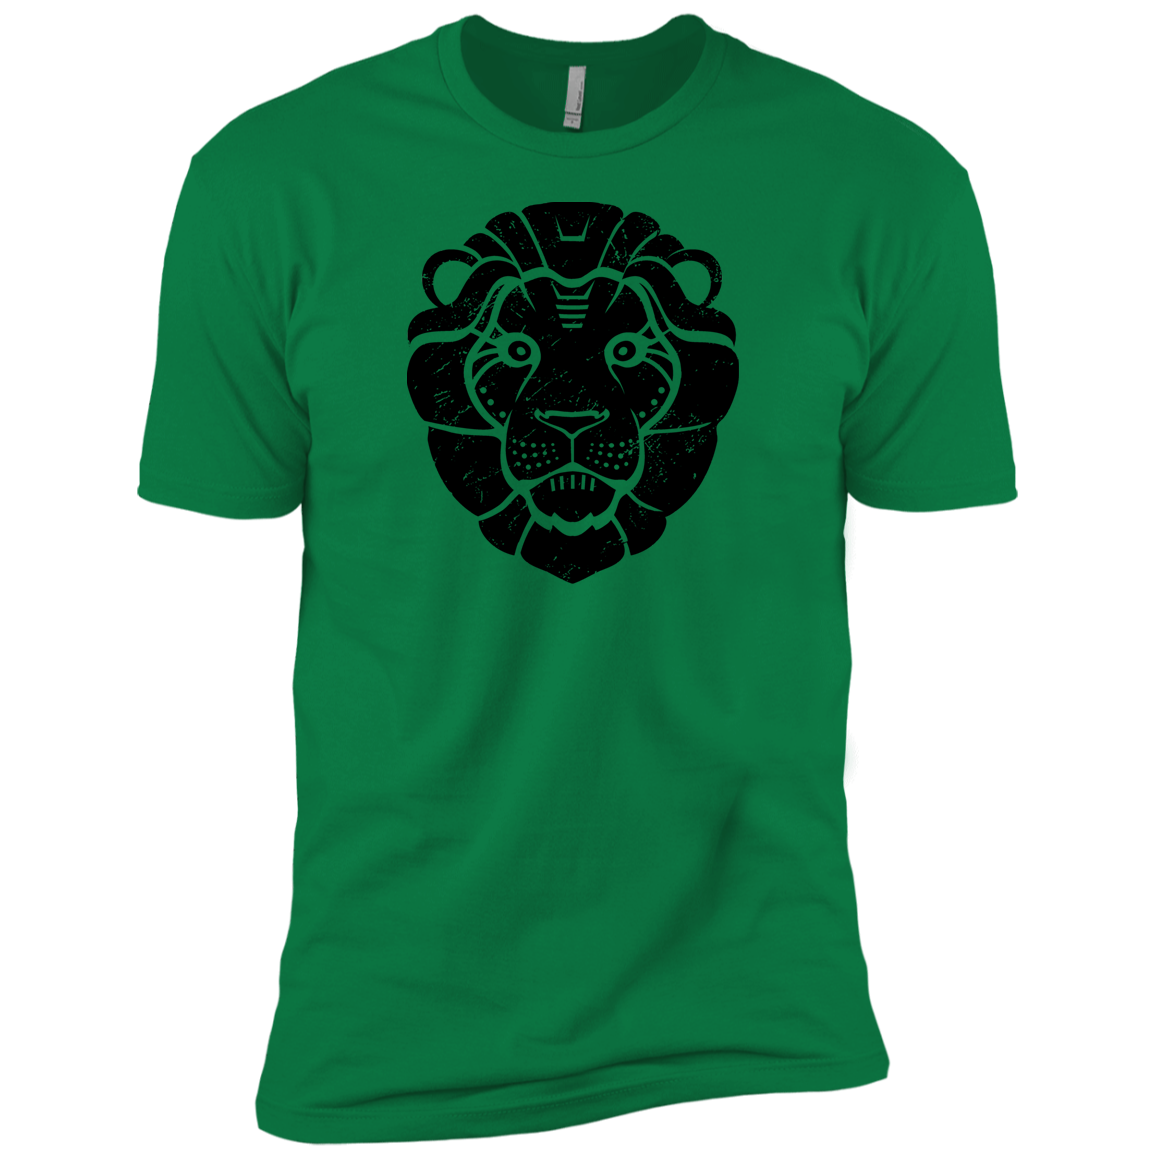 Black Distressed Emblem (Lion/Leo) - Dark Corps